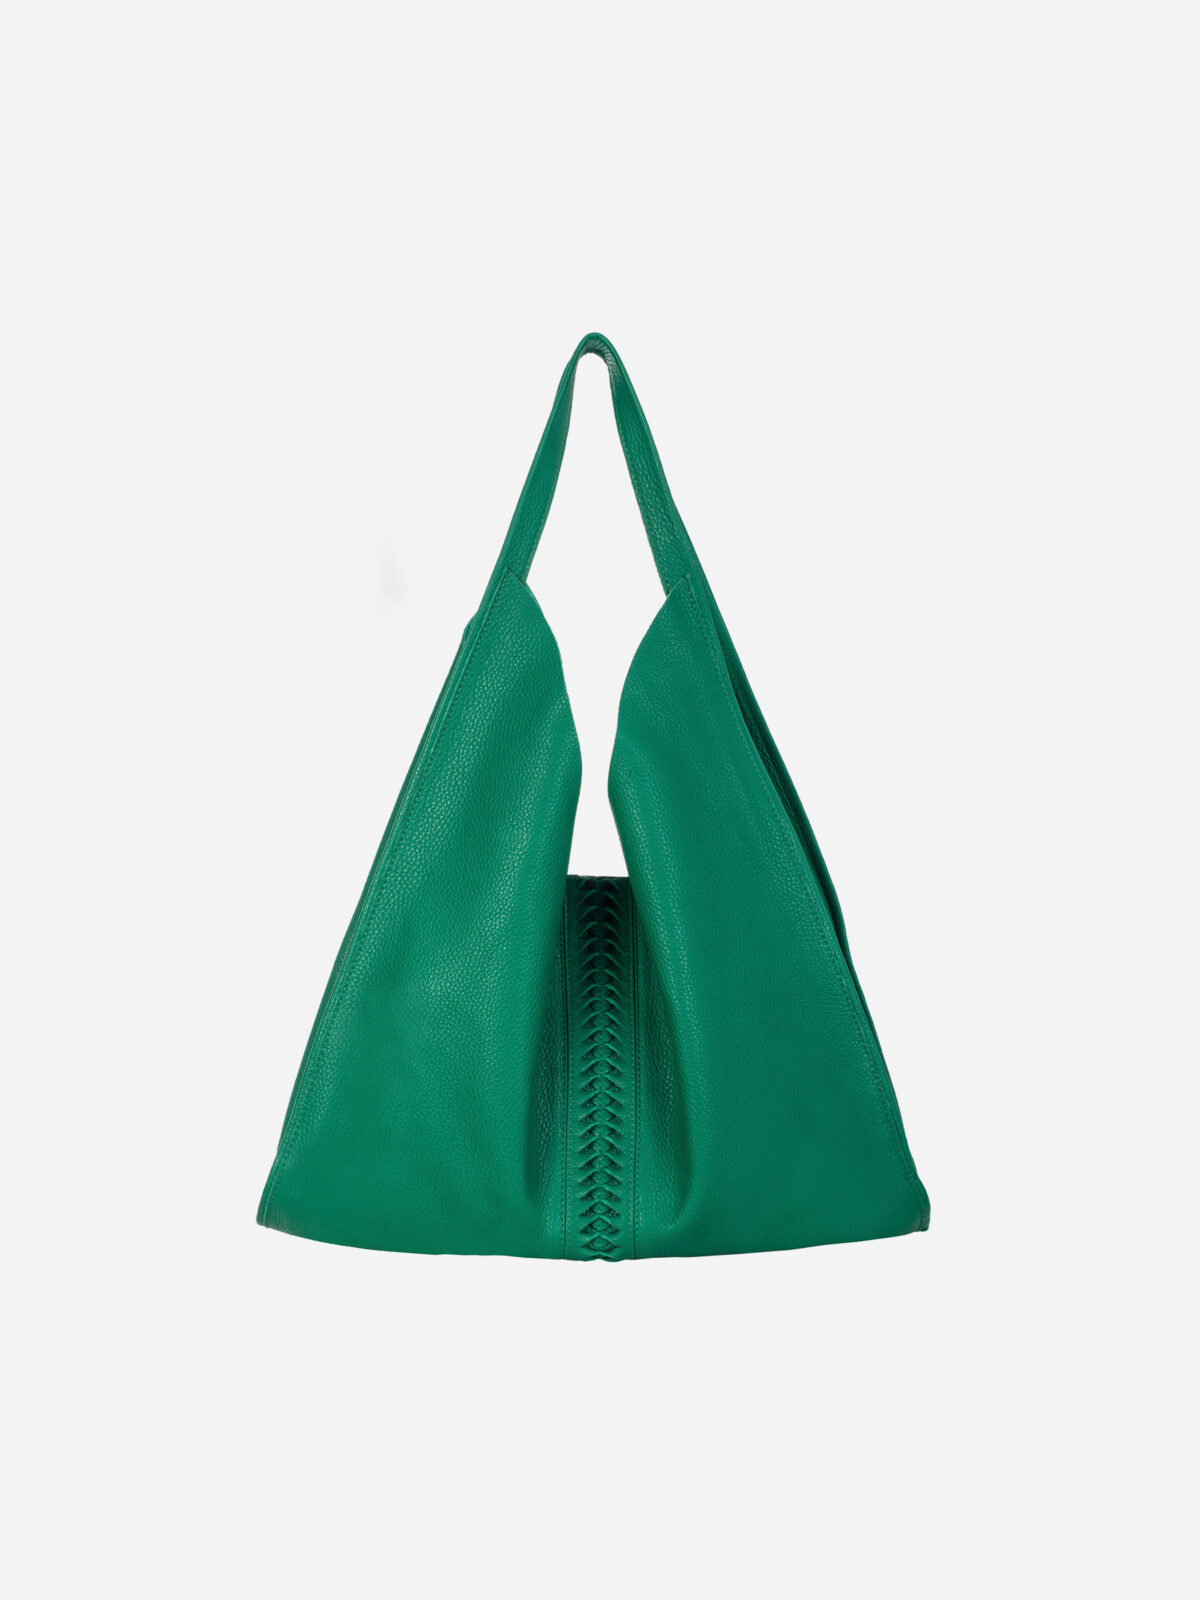 italian-job-irish-green-leather-bag-shoulder-park-house-matchboxathens